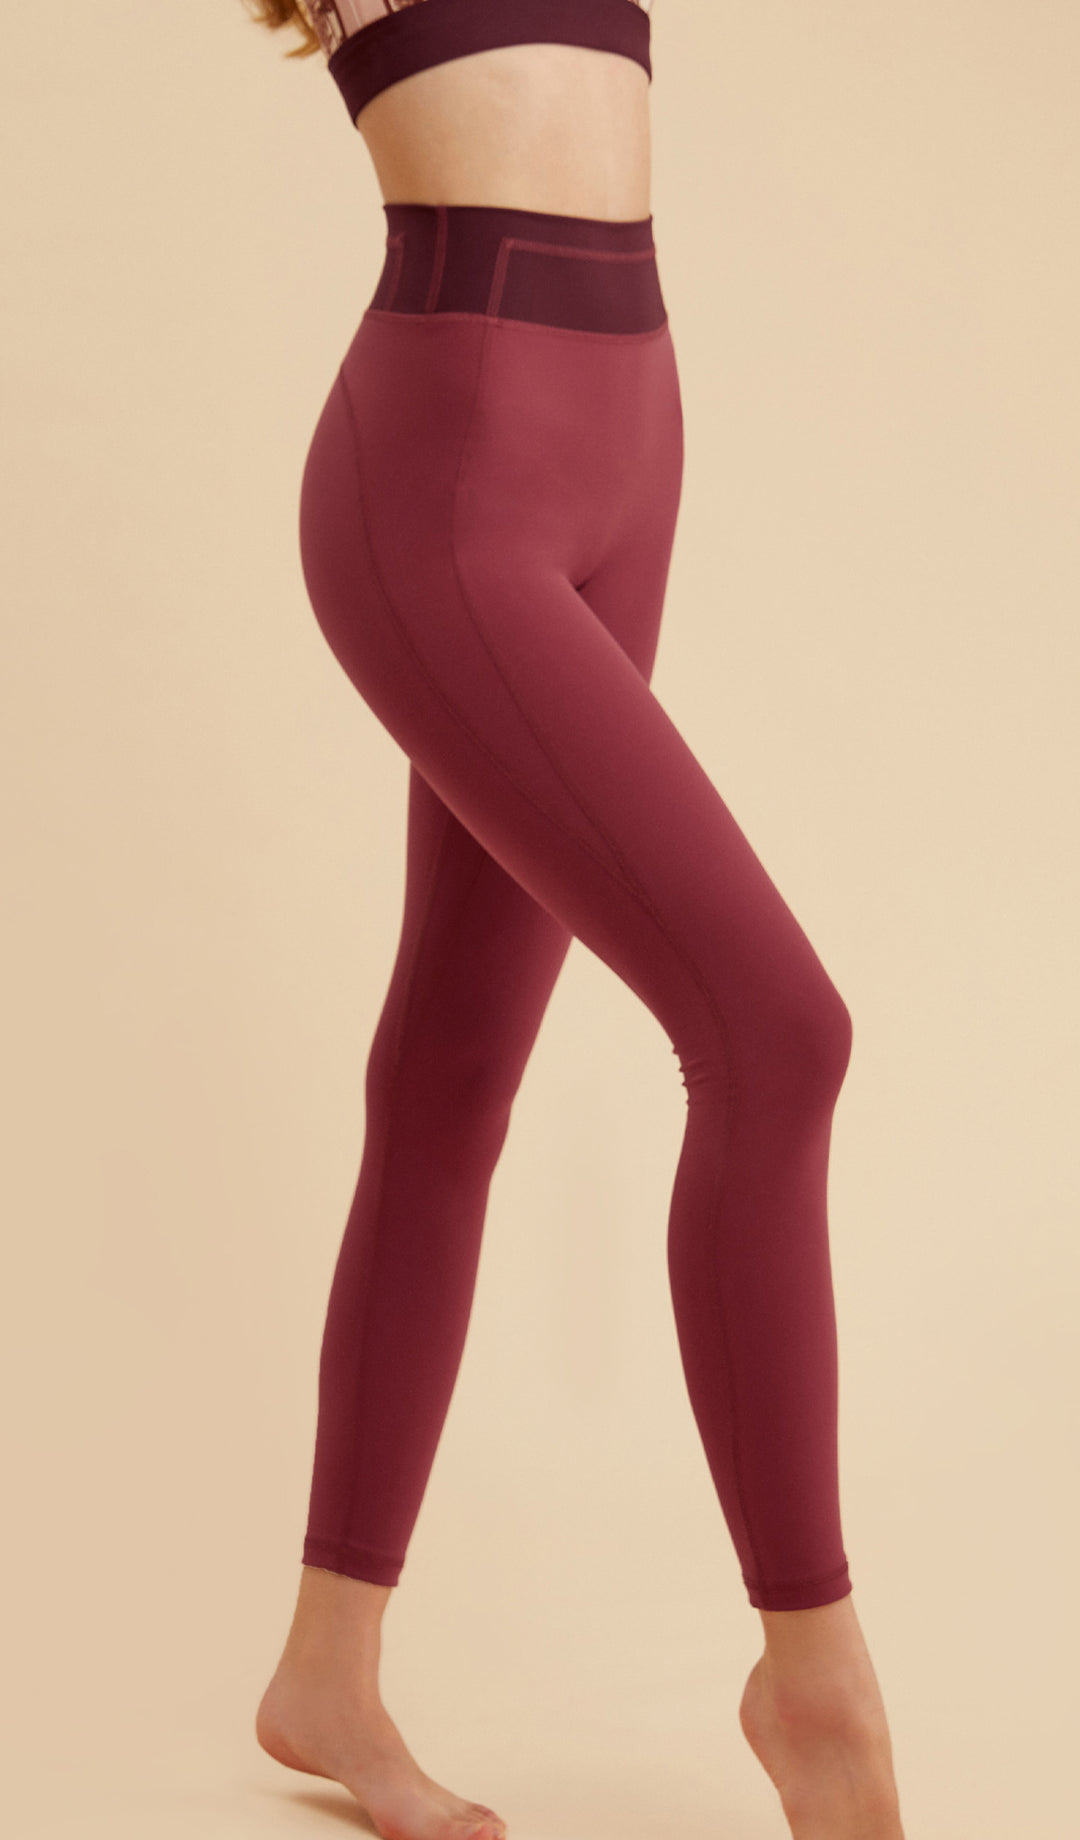 visesunny High Waist Yoga Pants with Pockets Modern Trendy Cute